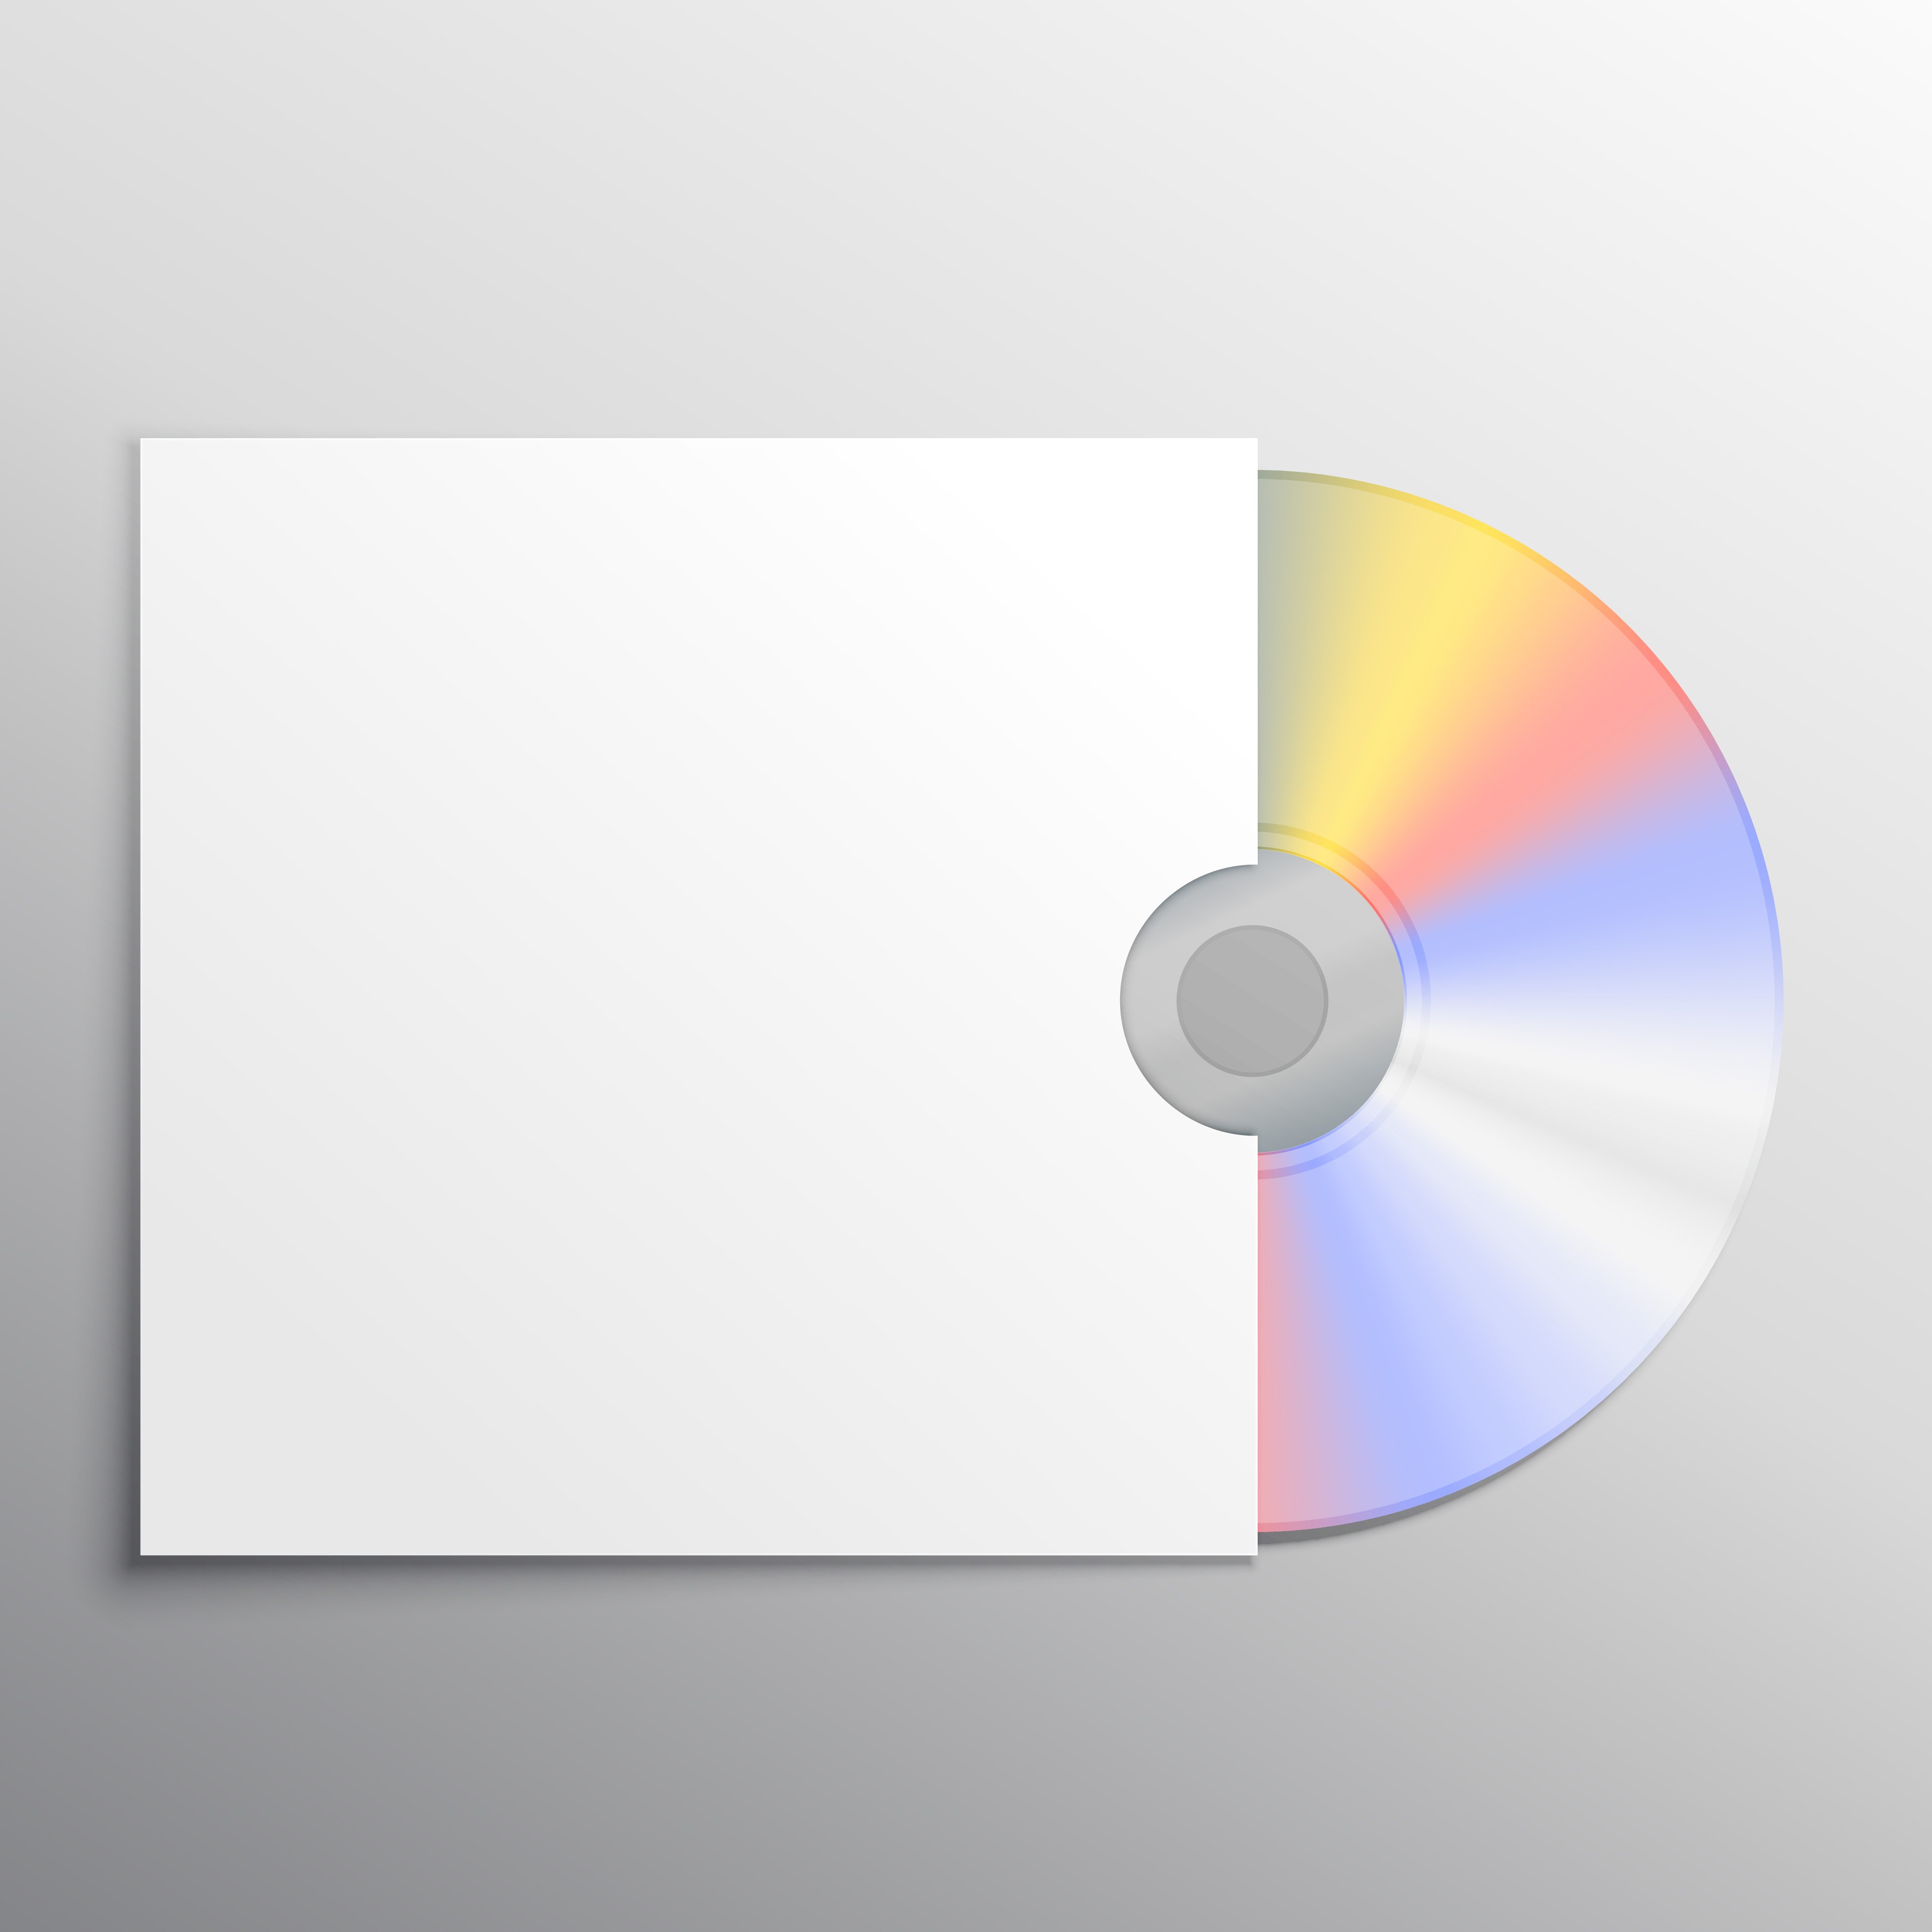 C cd y y. Обложка СД диска. Коробка для диска. Диск мокап. Обложка компакт диска.